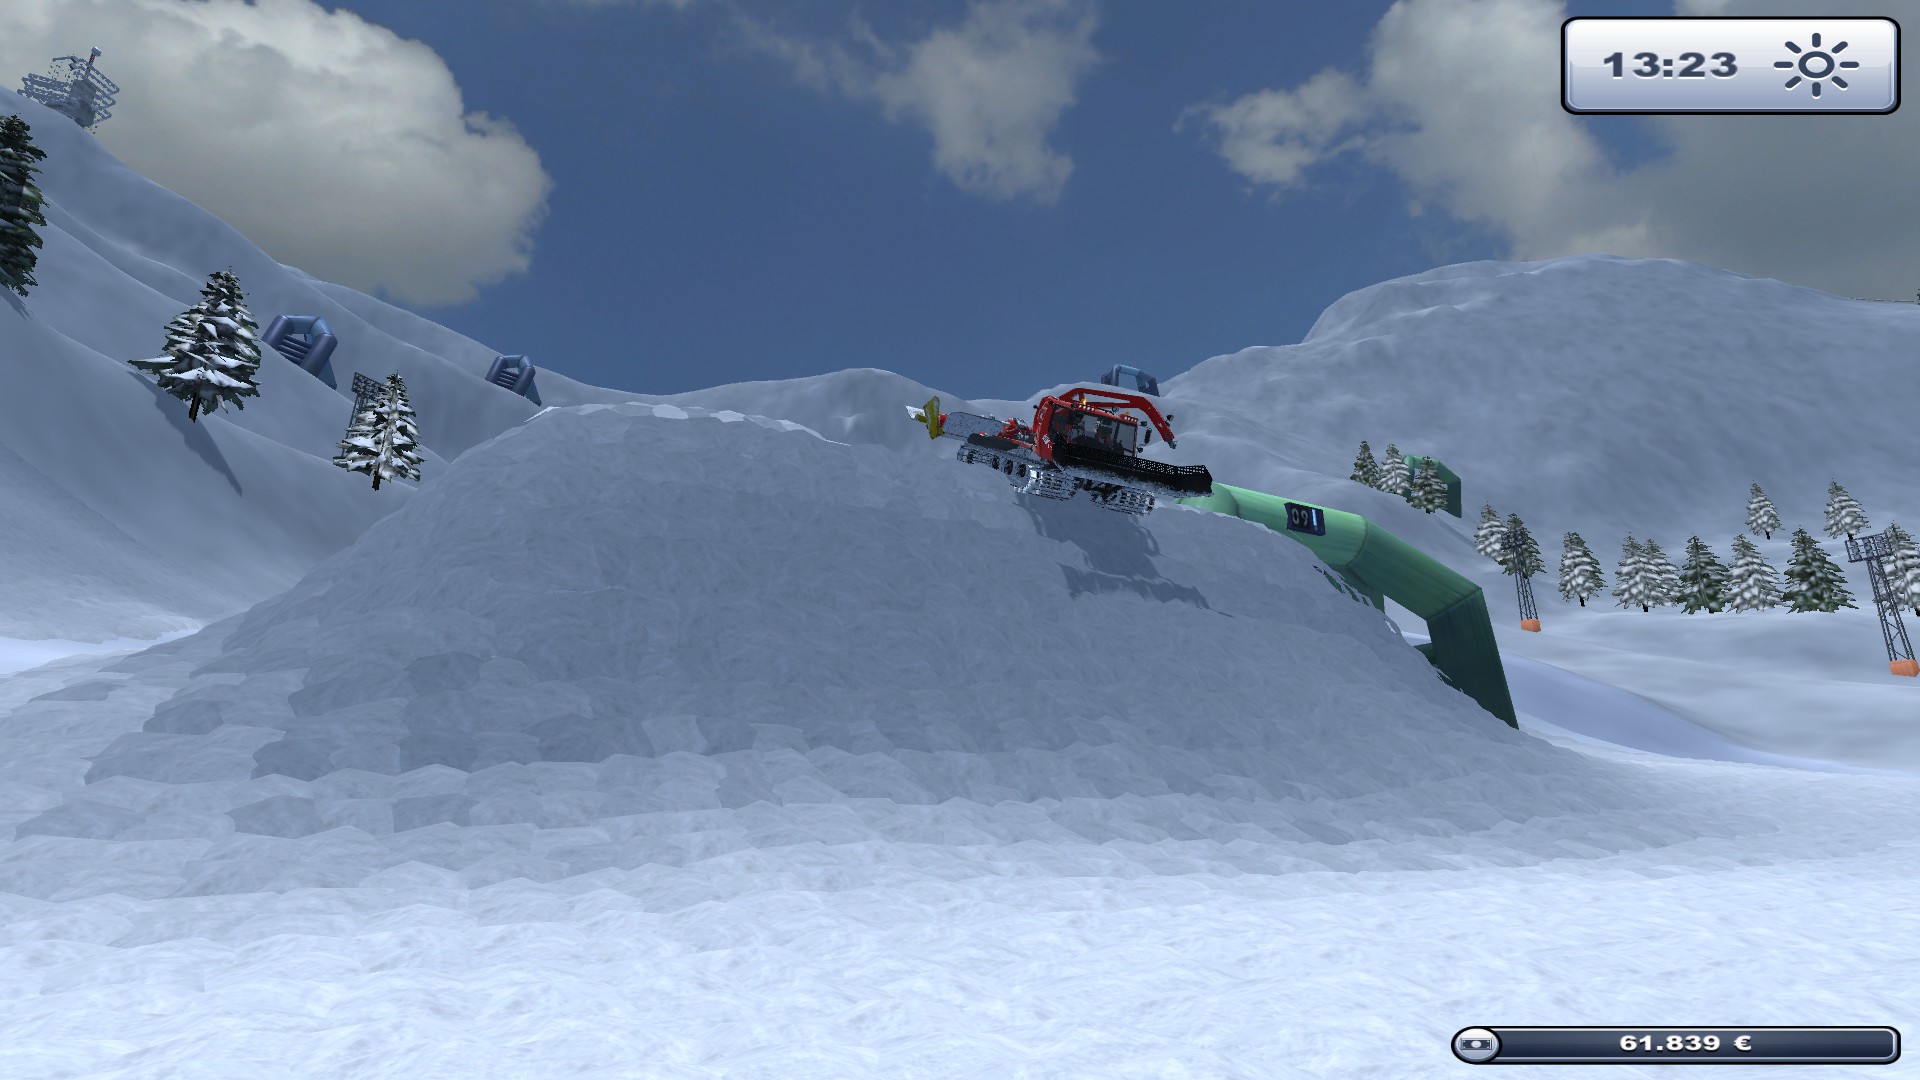 ski region simulator 2012 save game